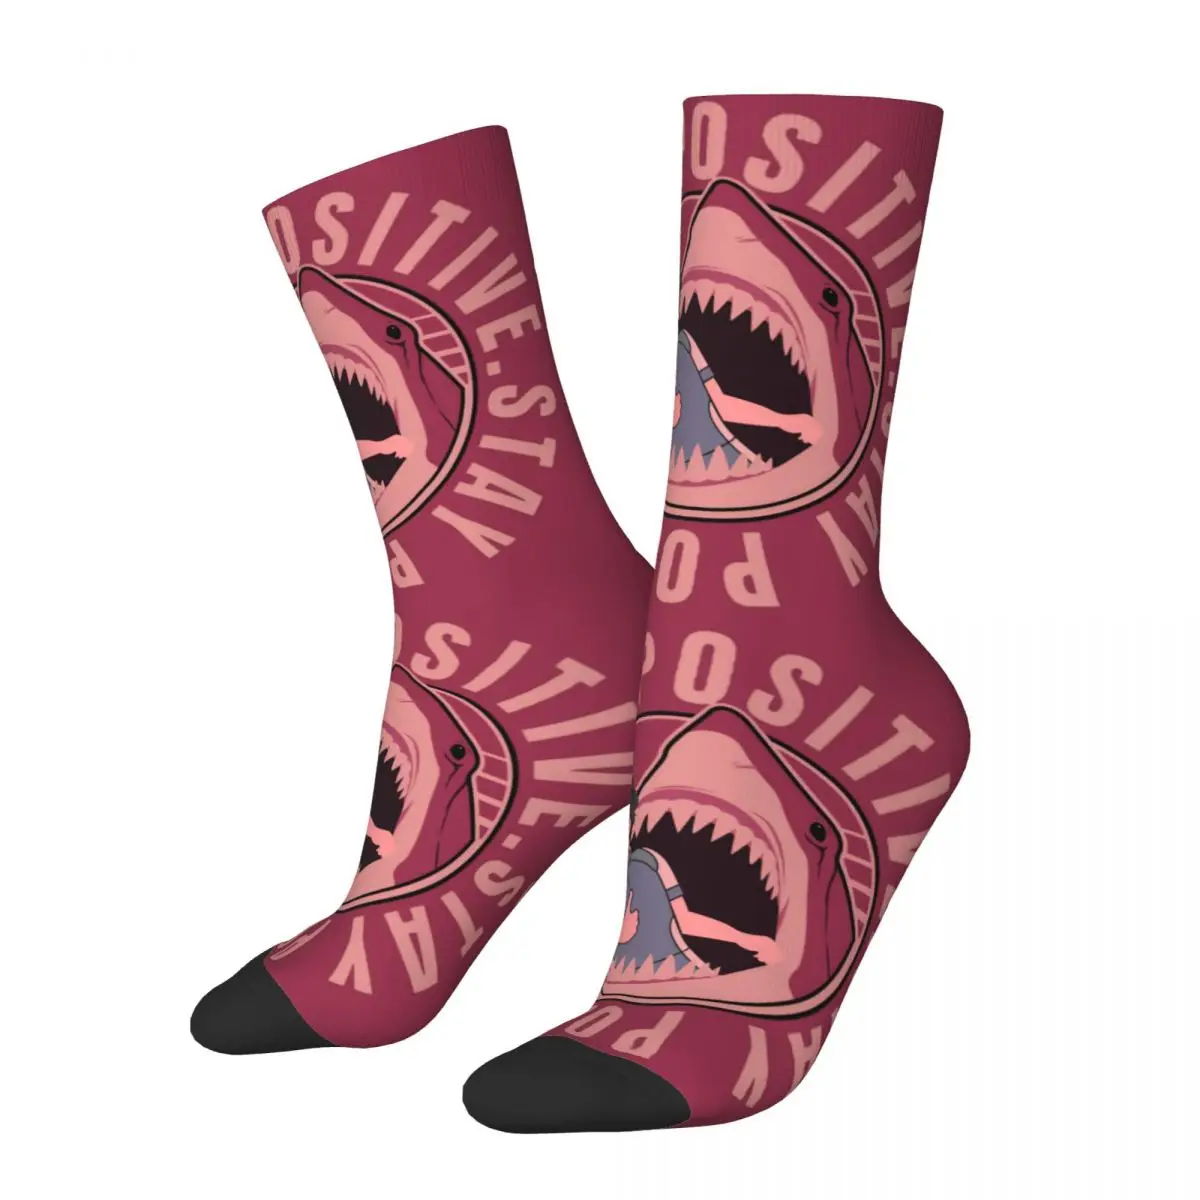 Stay Positive Shark And Boy Theme Design Socks Accessories for Men Cozy Dress Socks